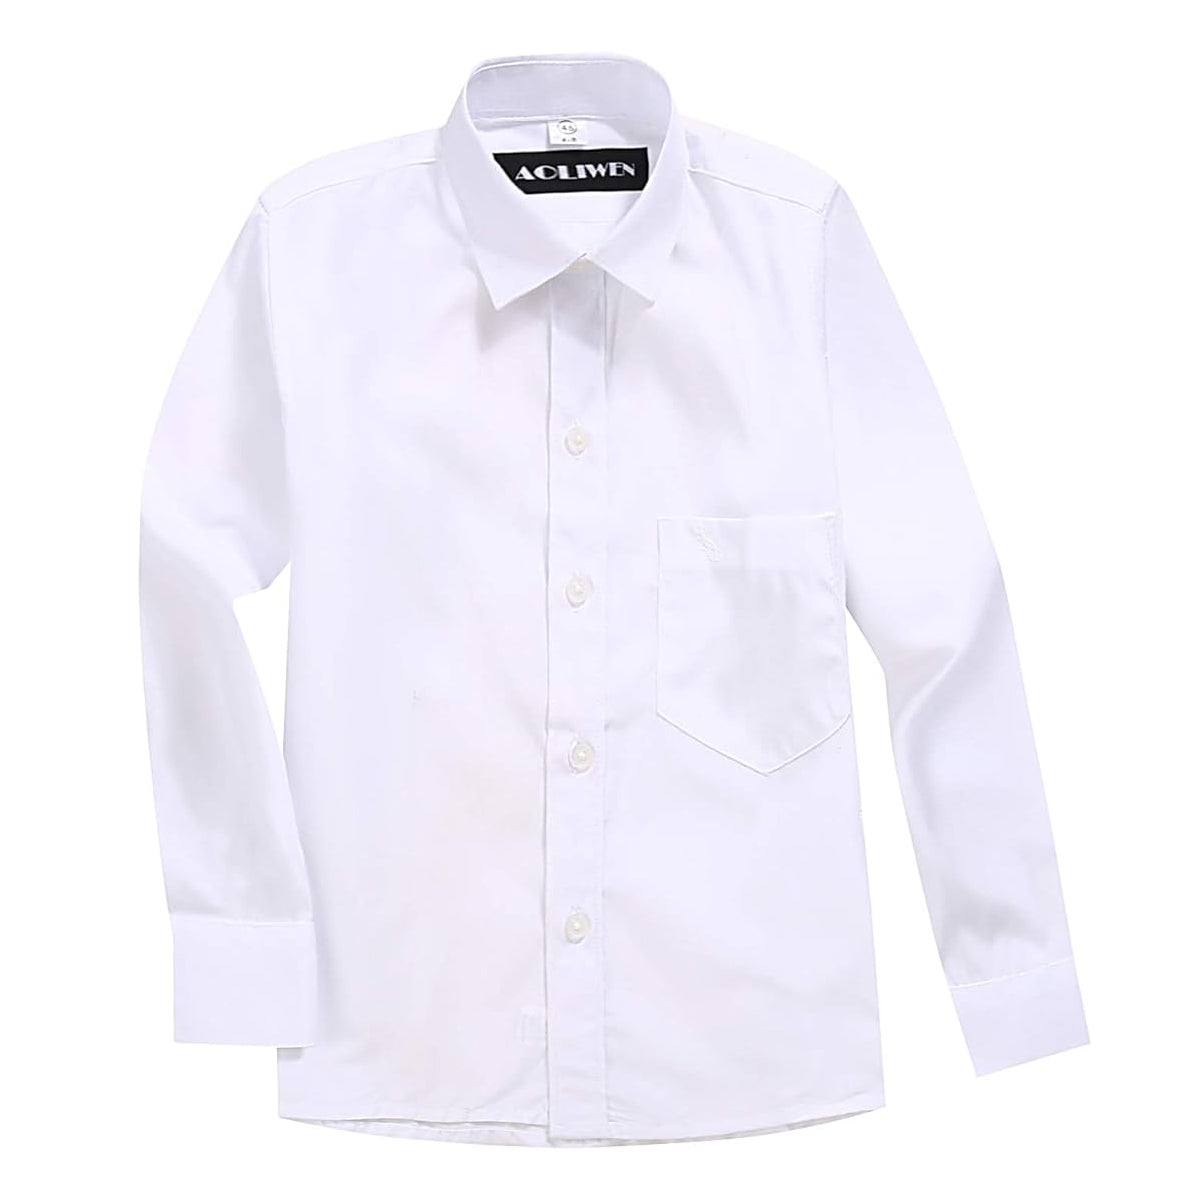 Boys Long Sleeves White Shirt Size (24-40)